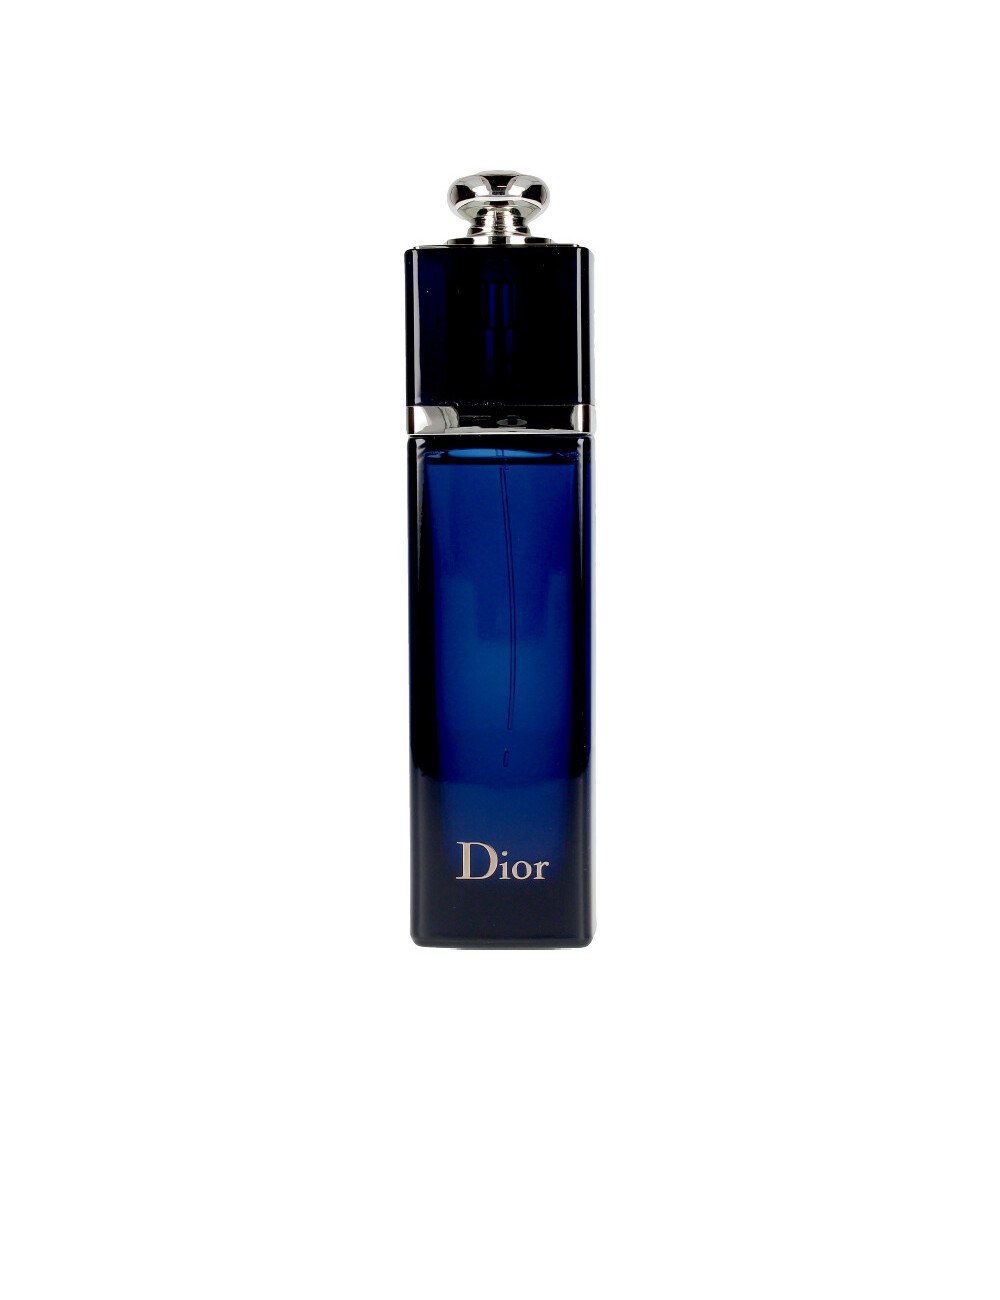 DIOR ADDICT eau de parfum vaporisateur 50 ml NE14605